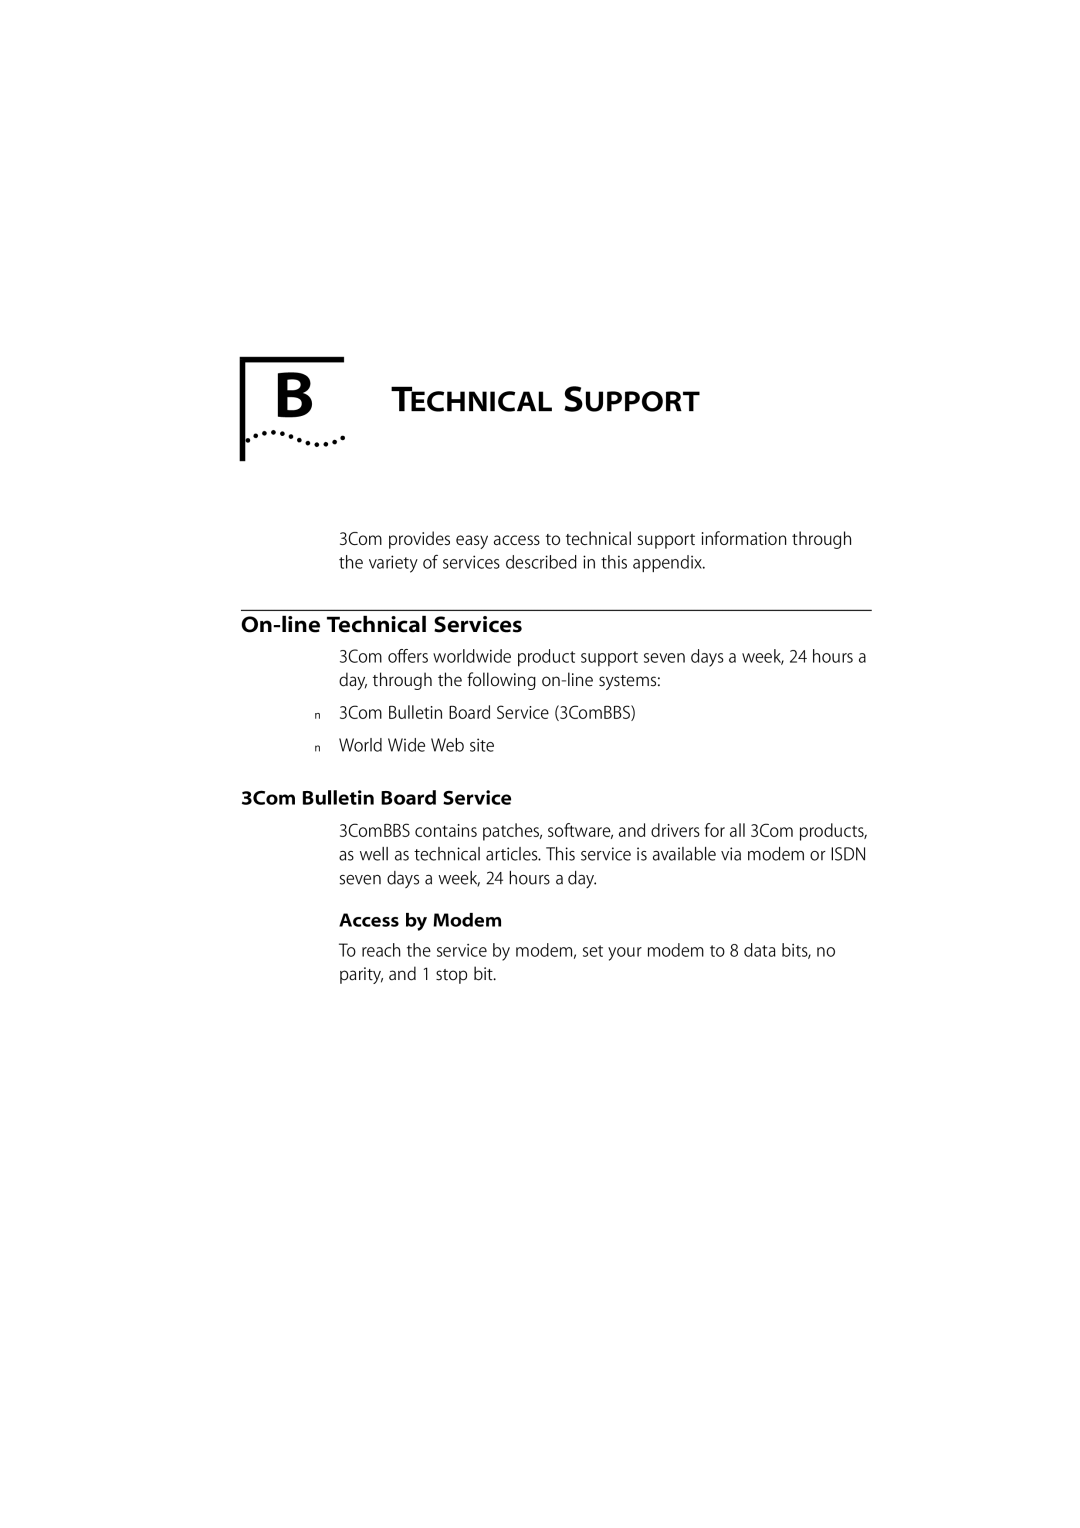 3Com 7000 manual On-line Technical Services, 3Com Bulletin Board Service 